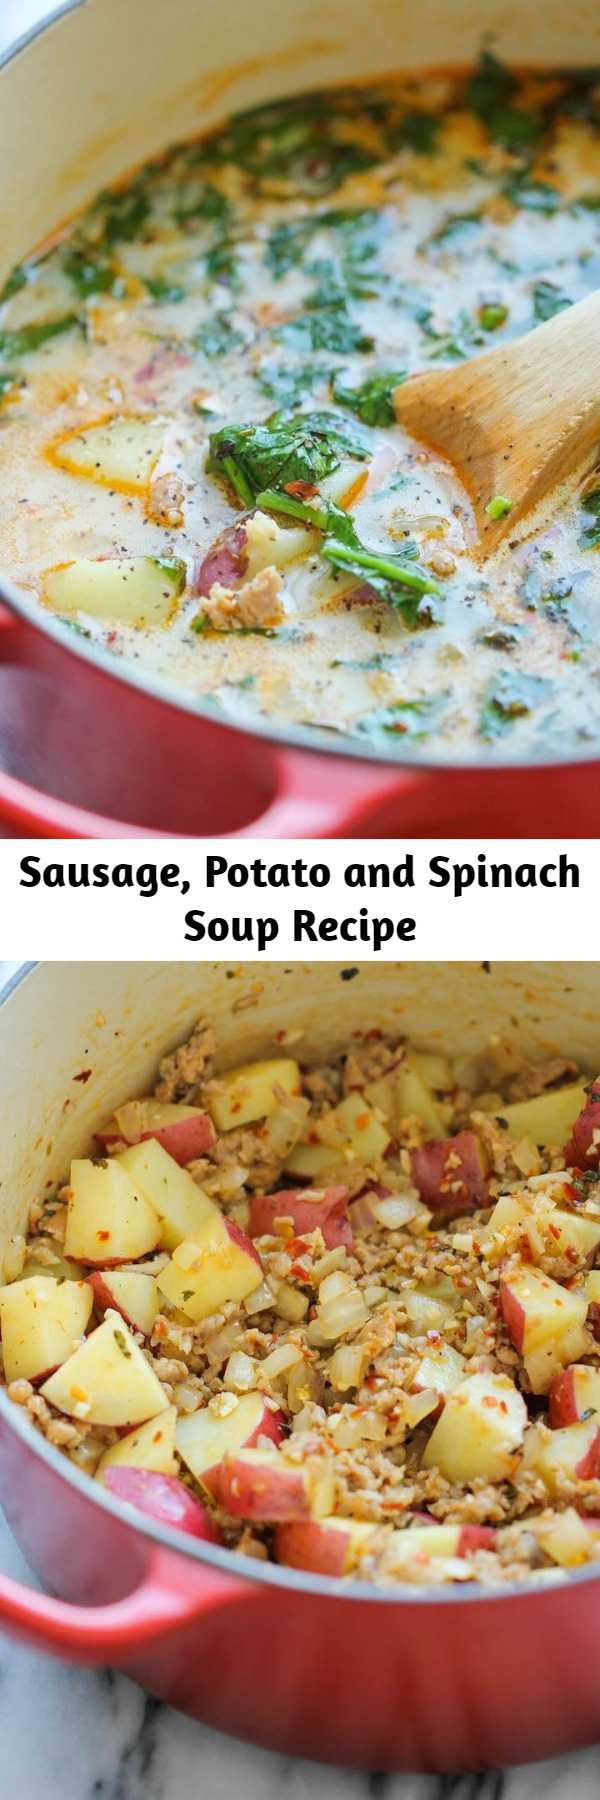 Sausage, Potato and Spinach Soup Recipe